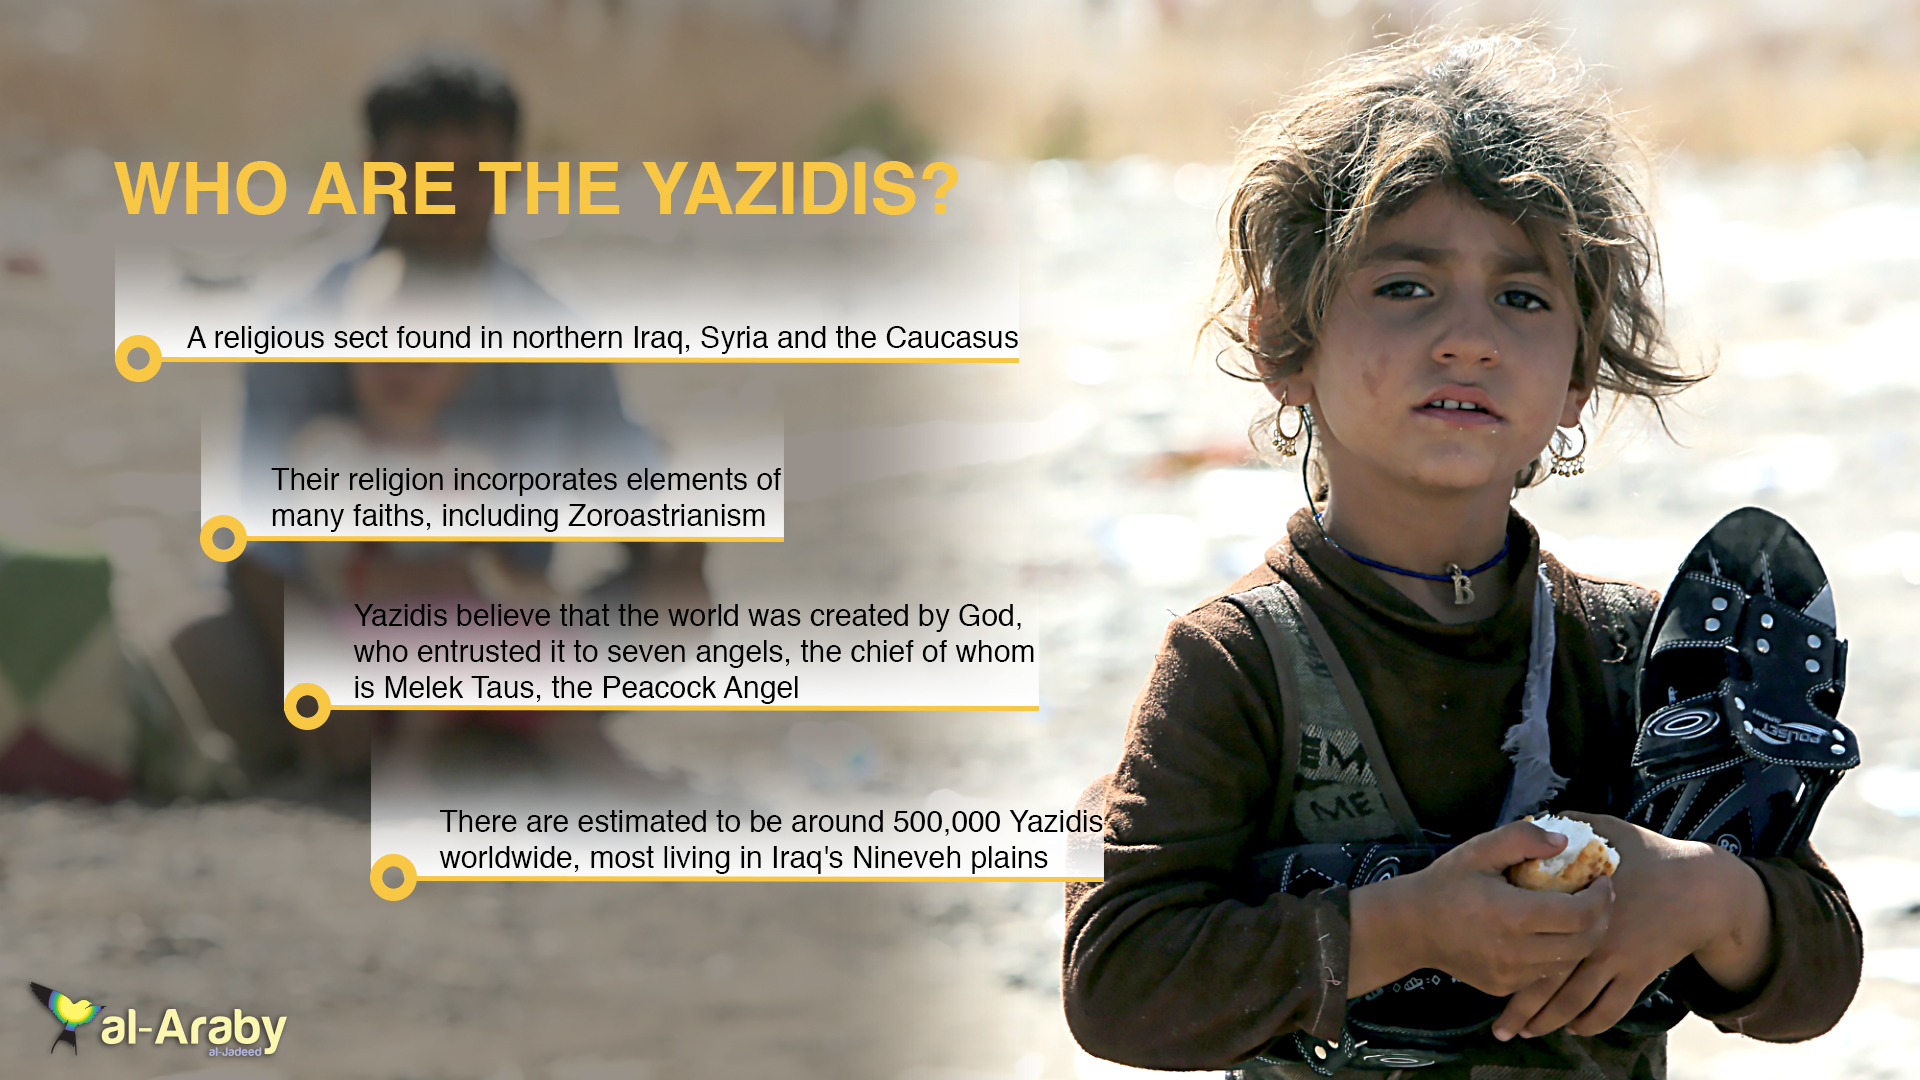 C:\Users\Alaraby\Downloads\who are the Yazidis.jpg